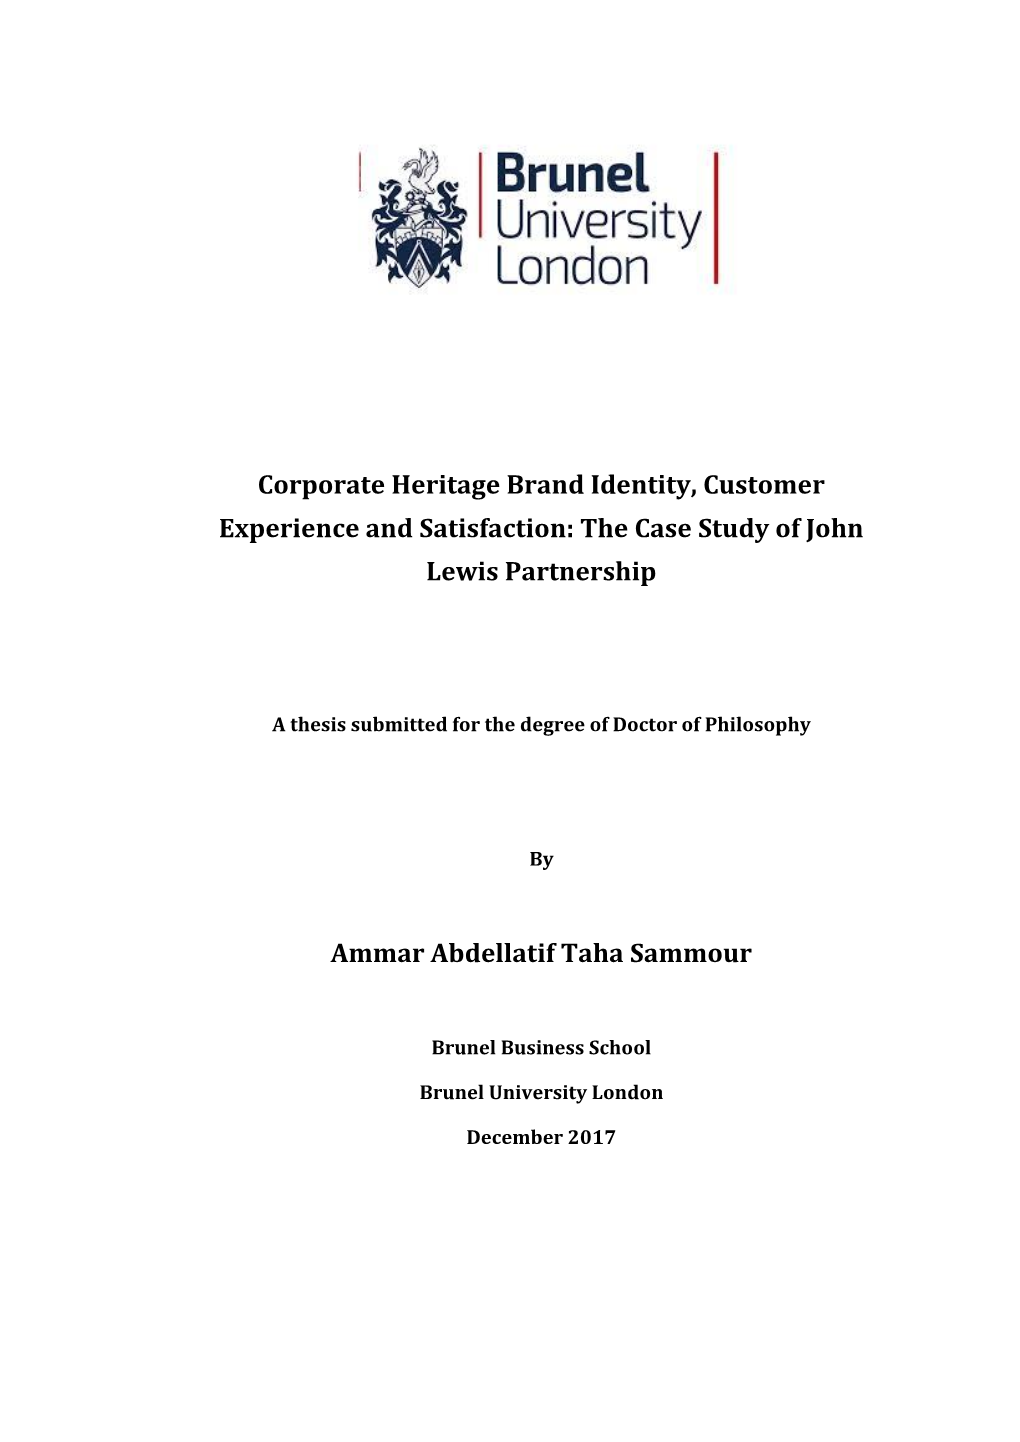 Corporate Heritage Brand Identity, Customer Experience and Satisfaction: the Case Study of John Lewis Partnership Ammar Abdellat